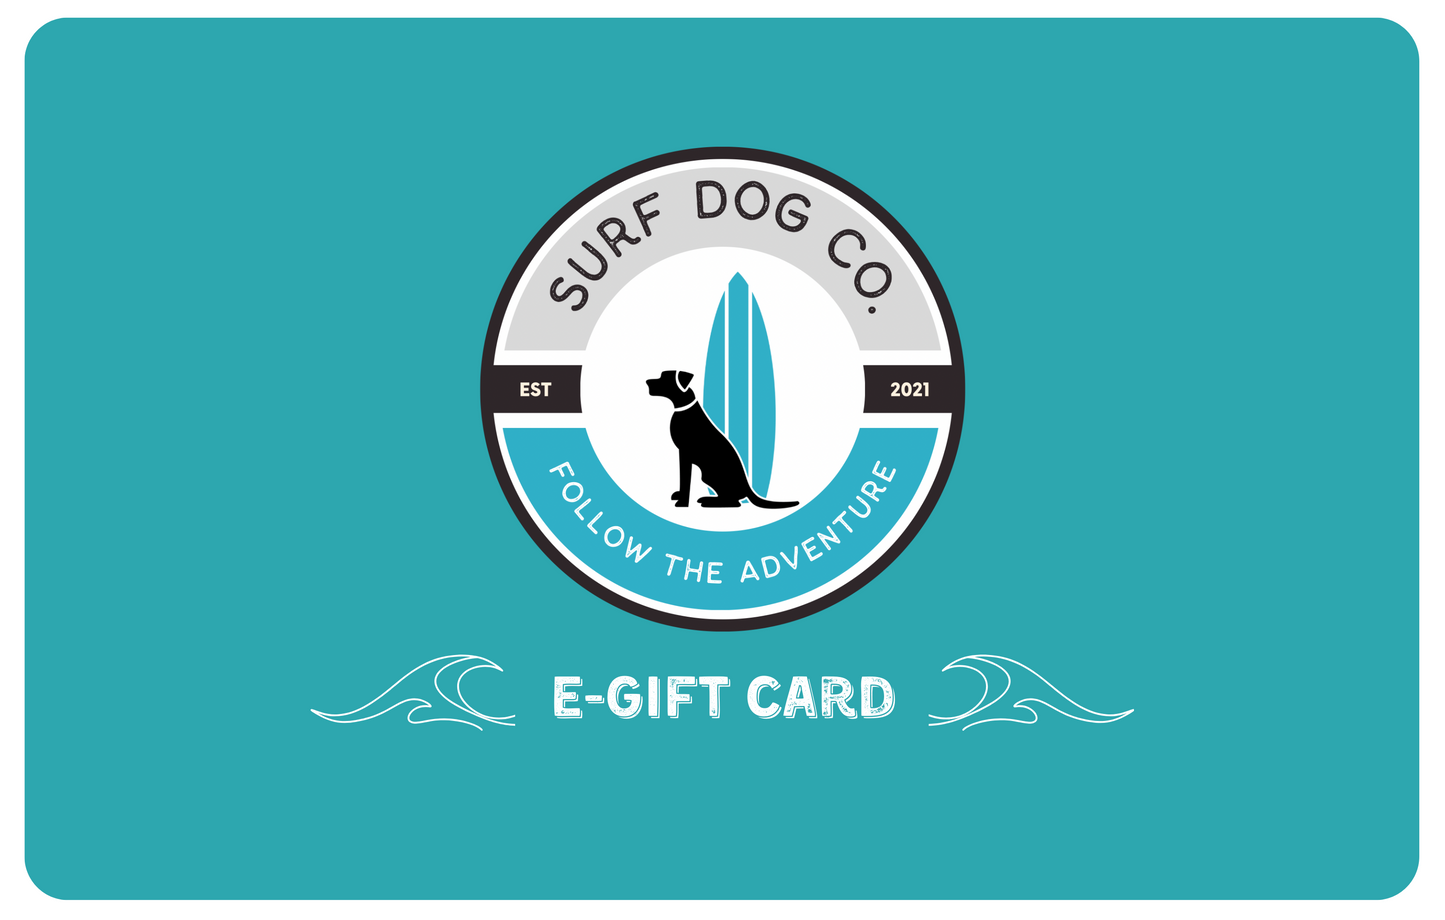 Surf Dog Gift Card